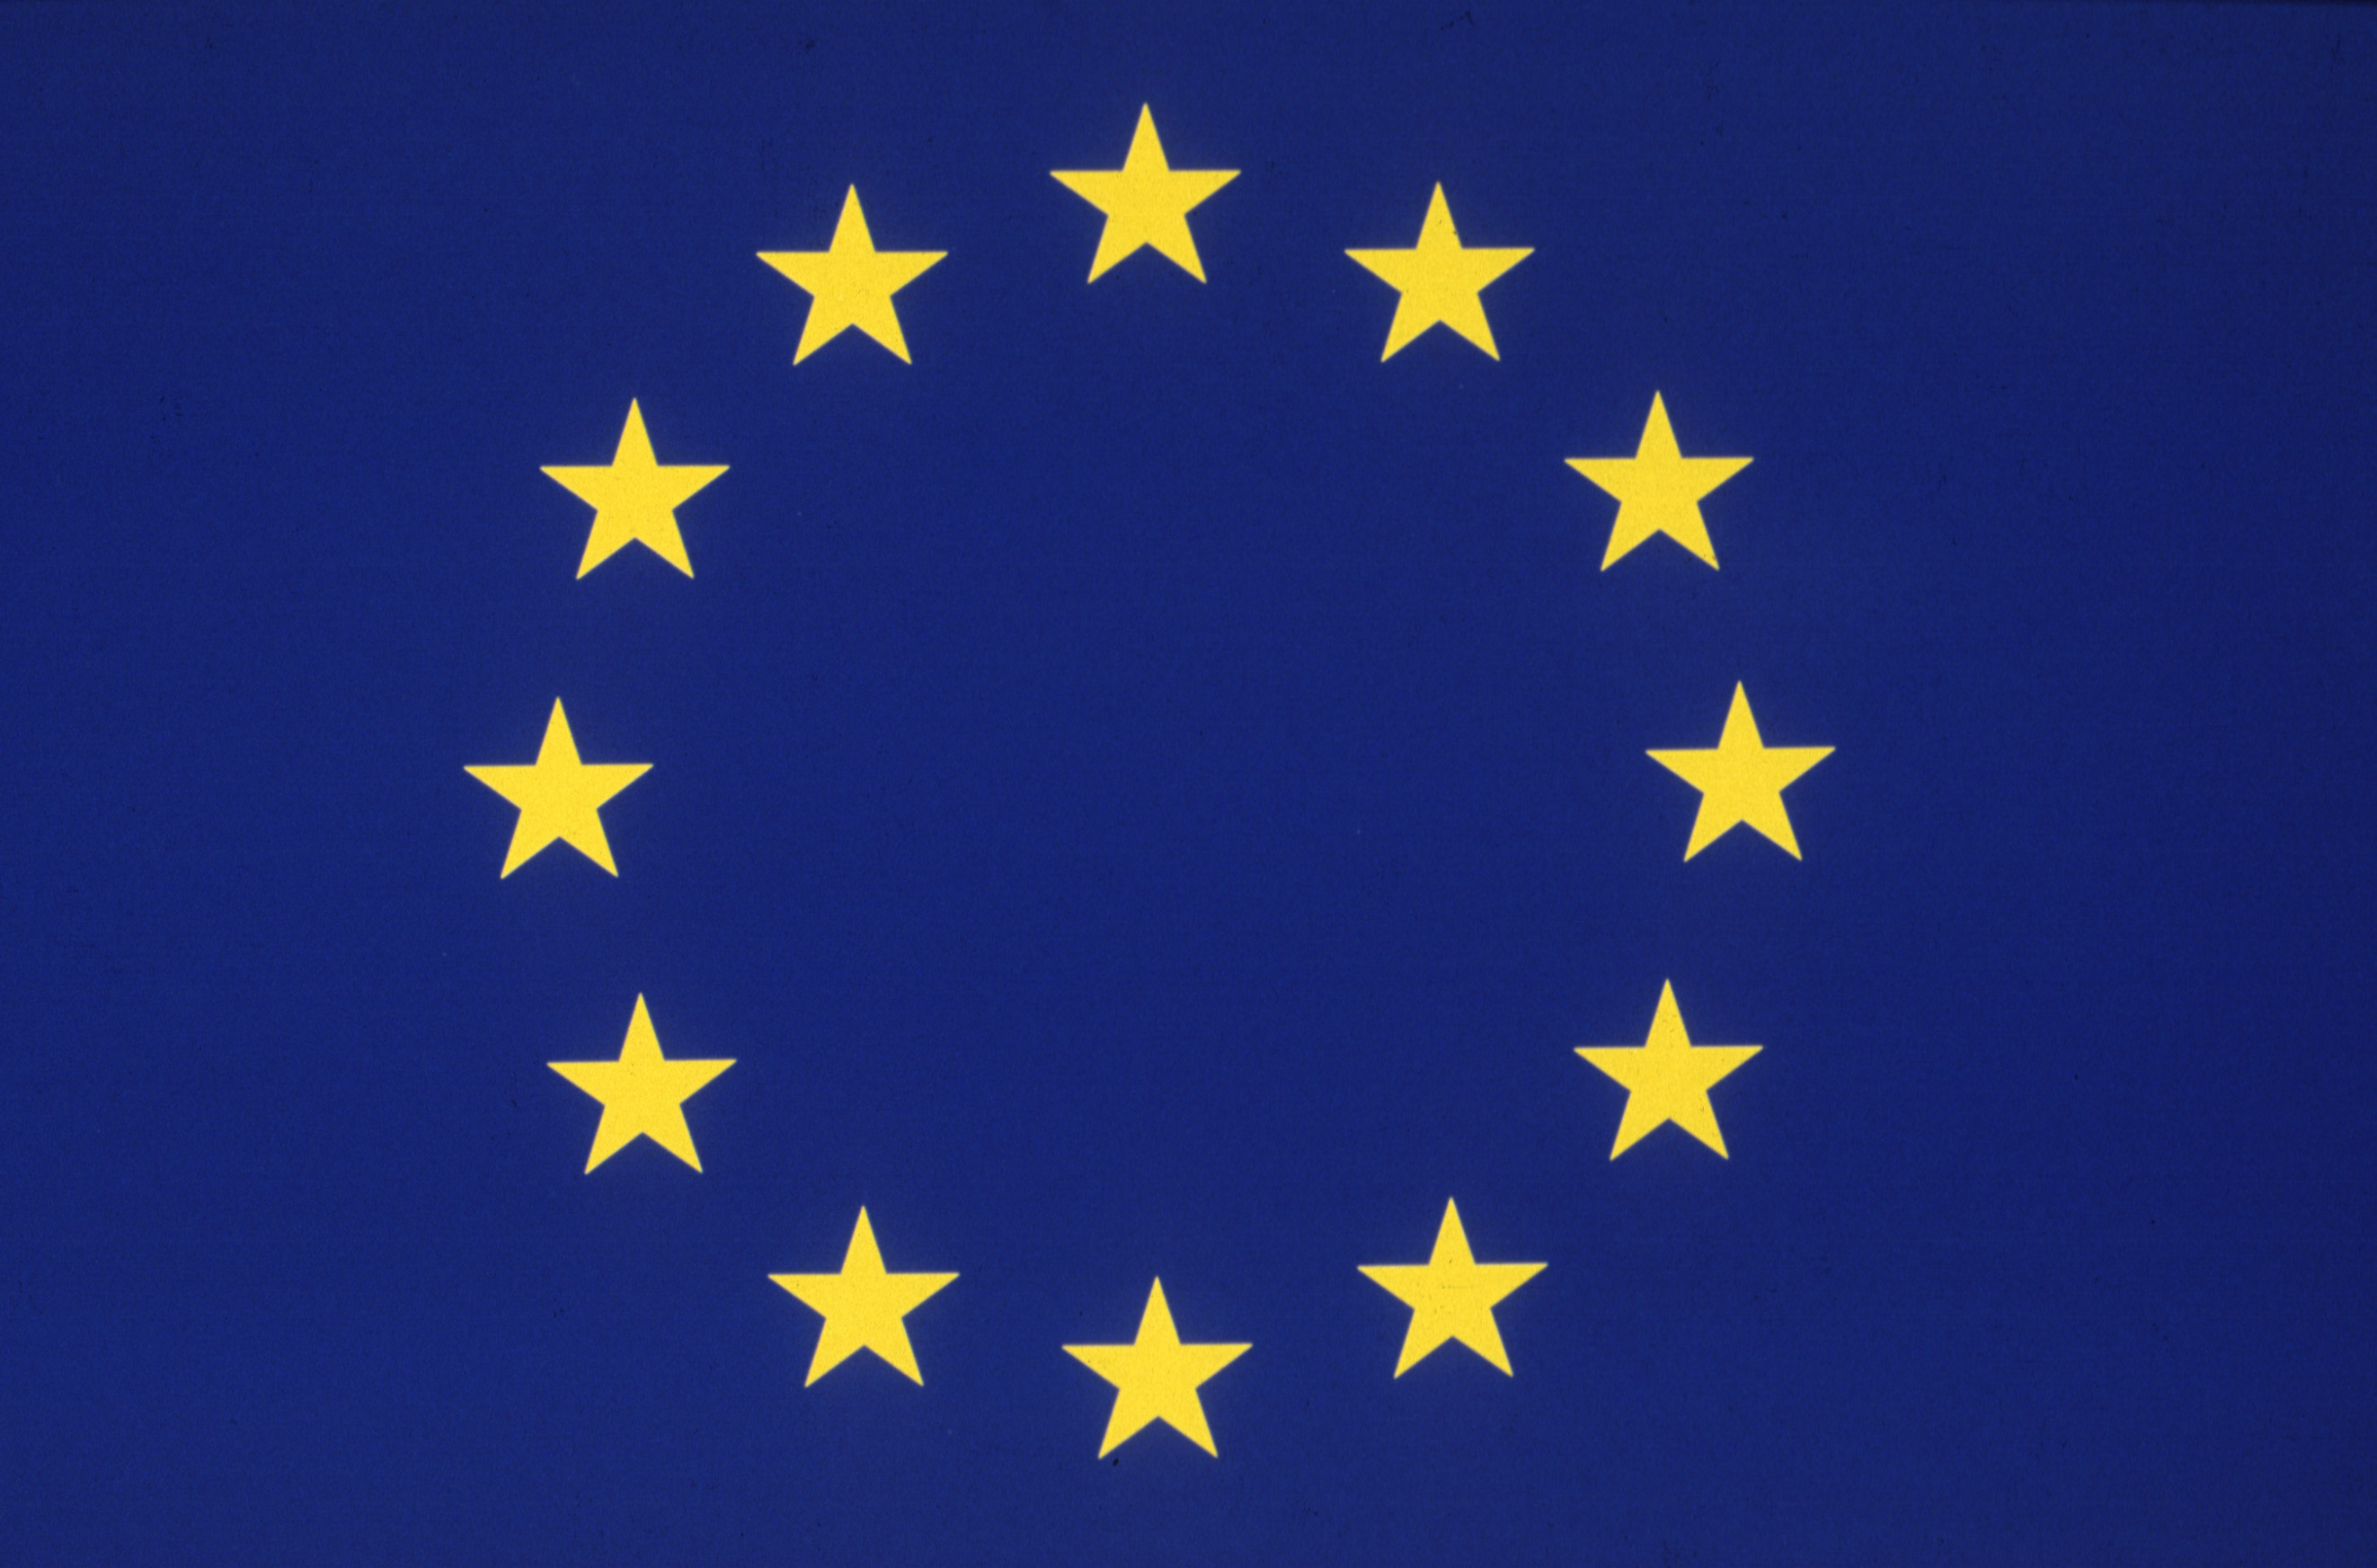  The graphic version of the European Union flag logo.